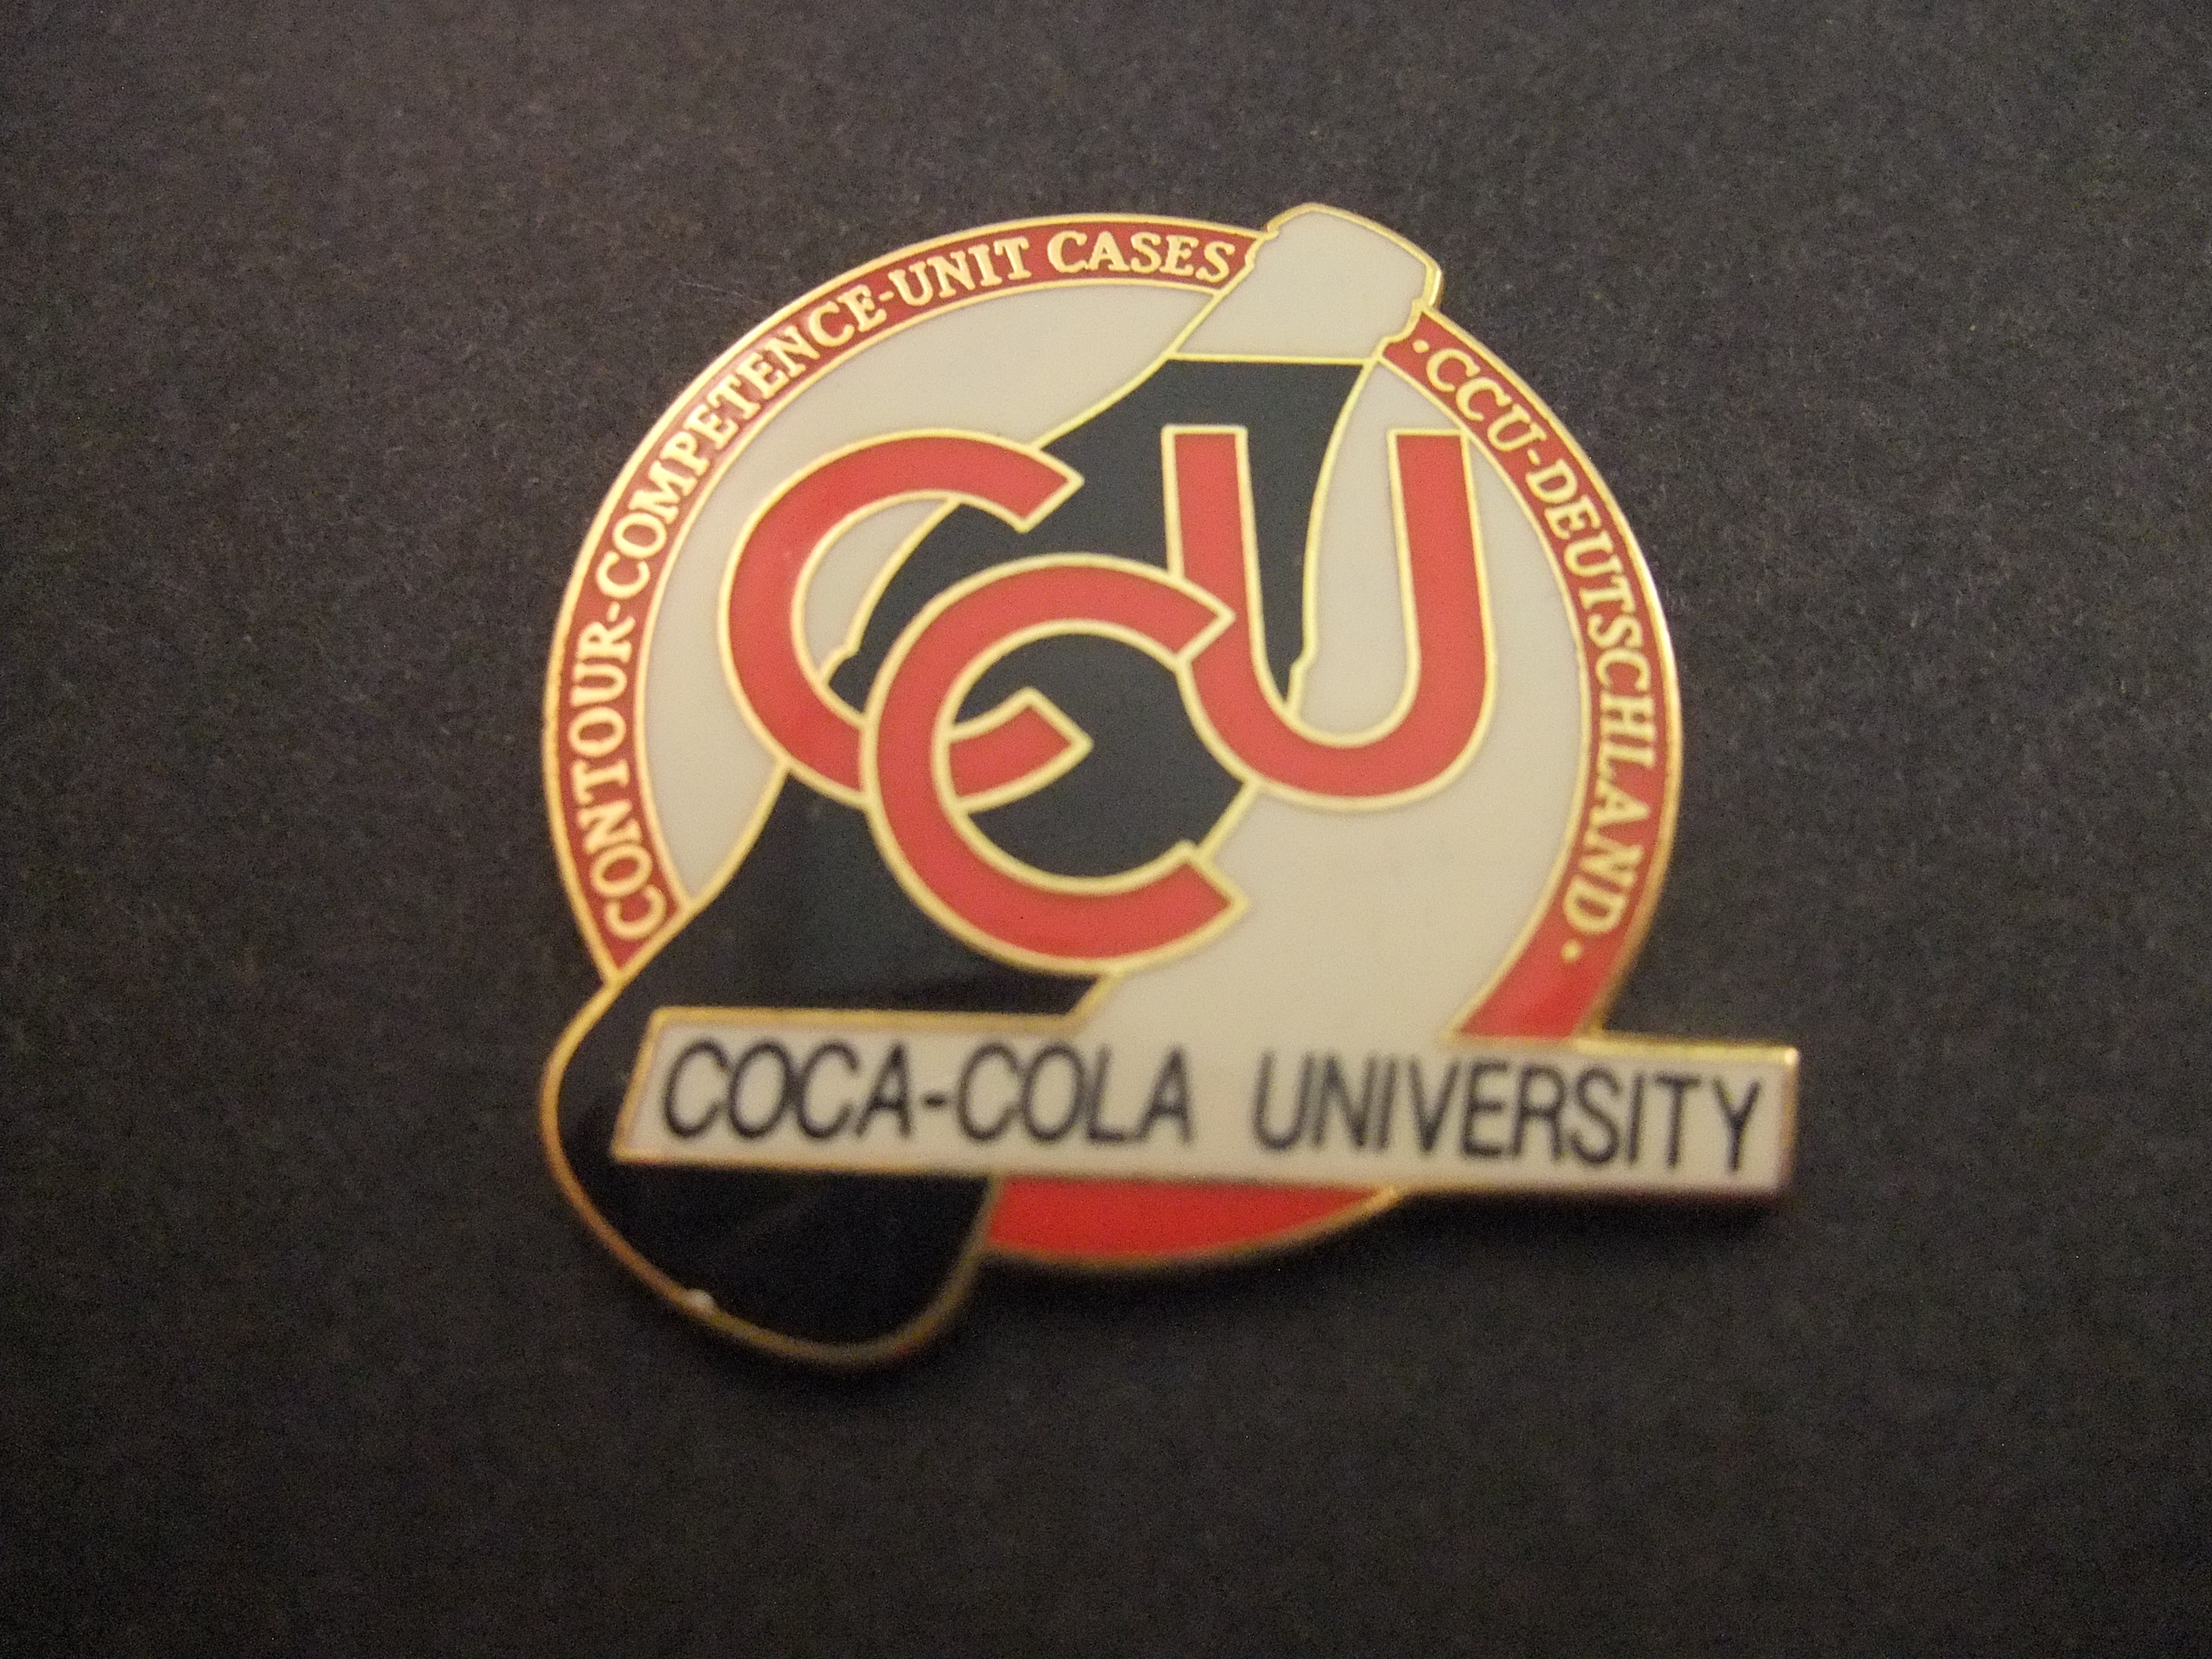 Coca-Cola University training